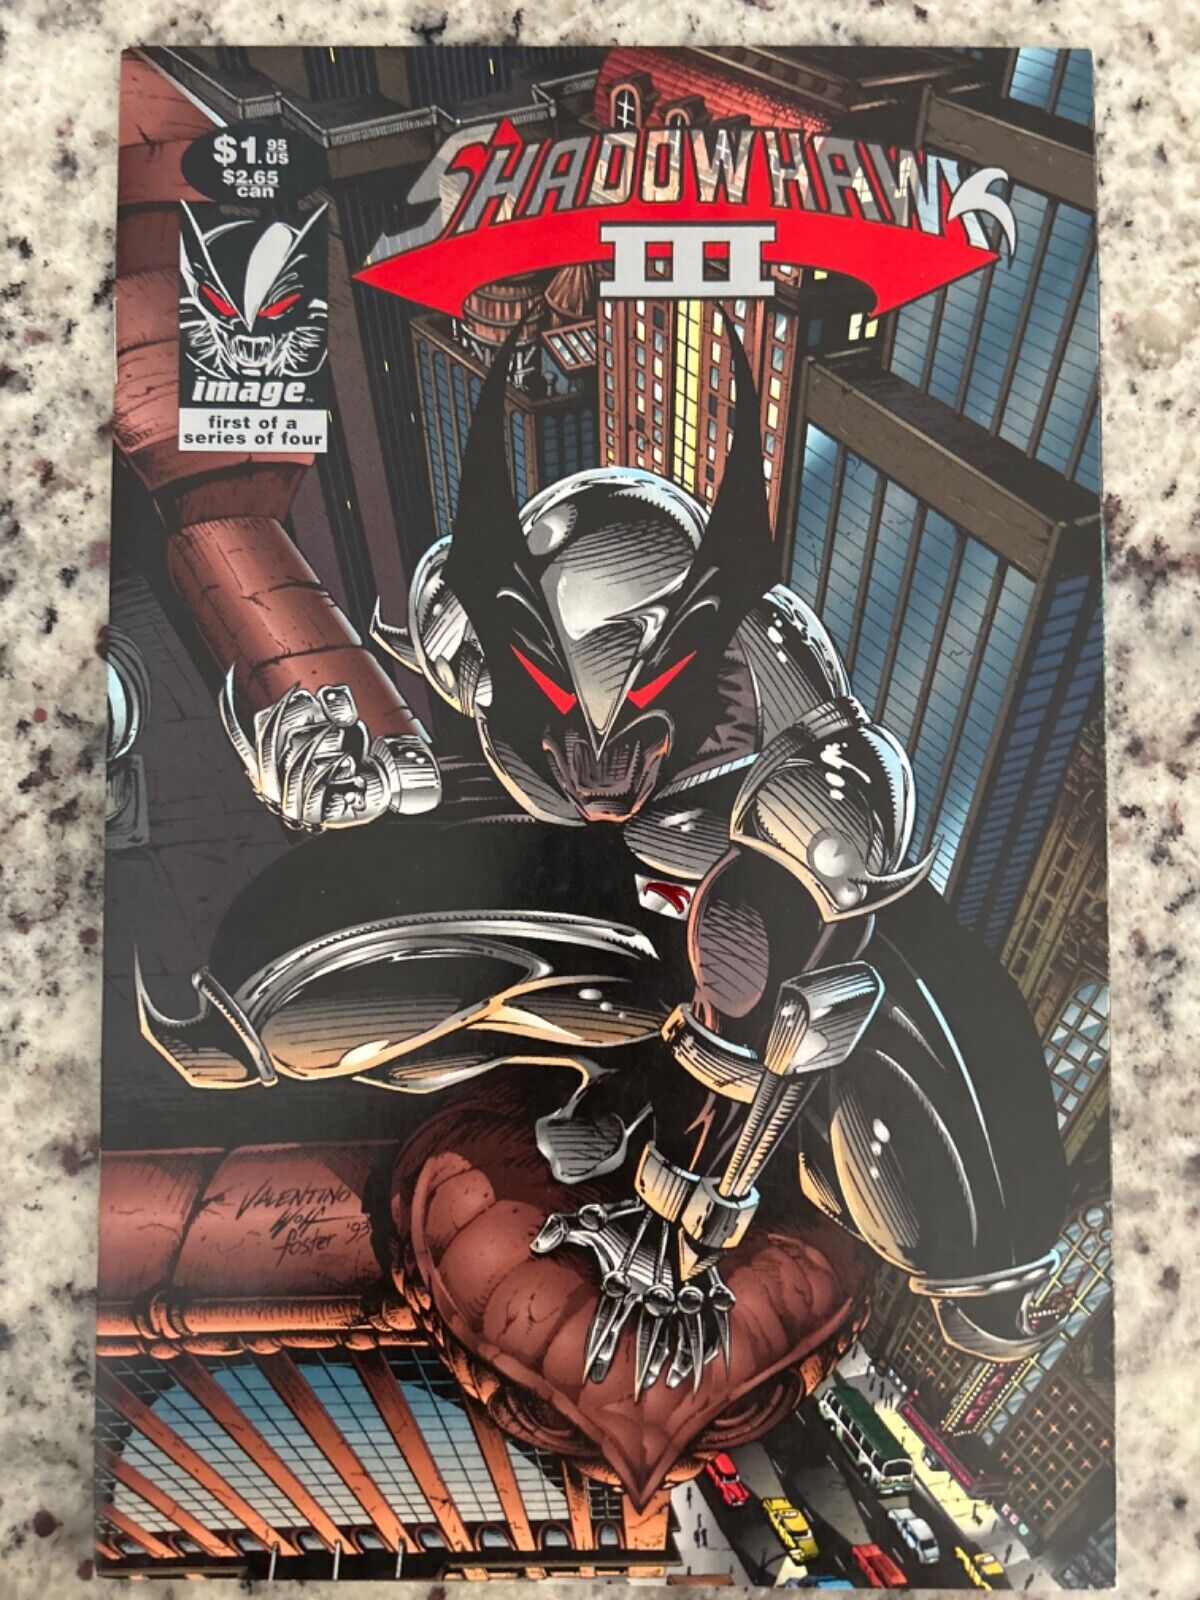 Shadowhawk III #1 Vol. 3 (image, 1993) Key 1st App of Valentine, ungraded